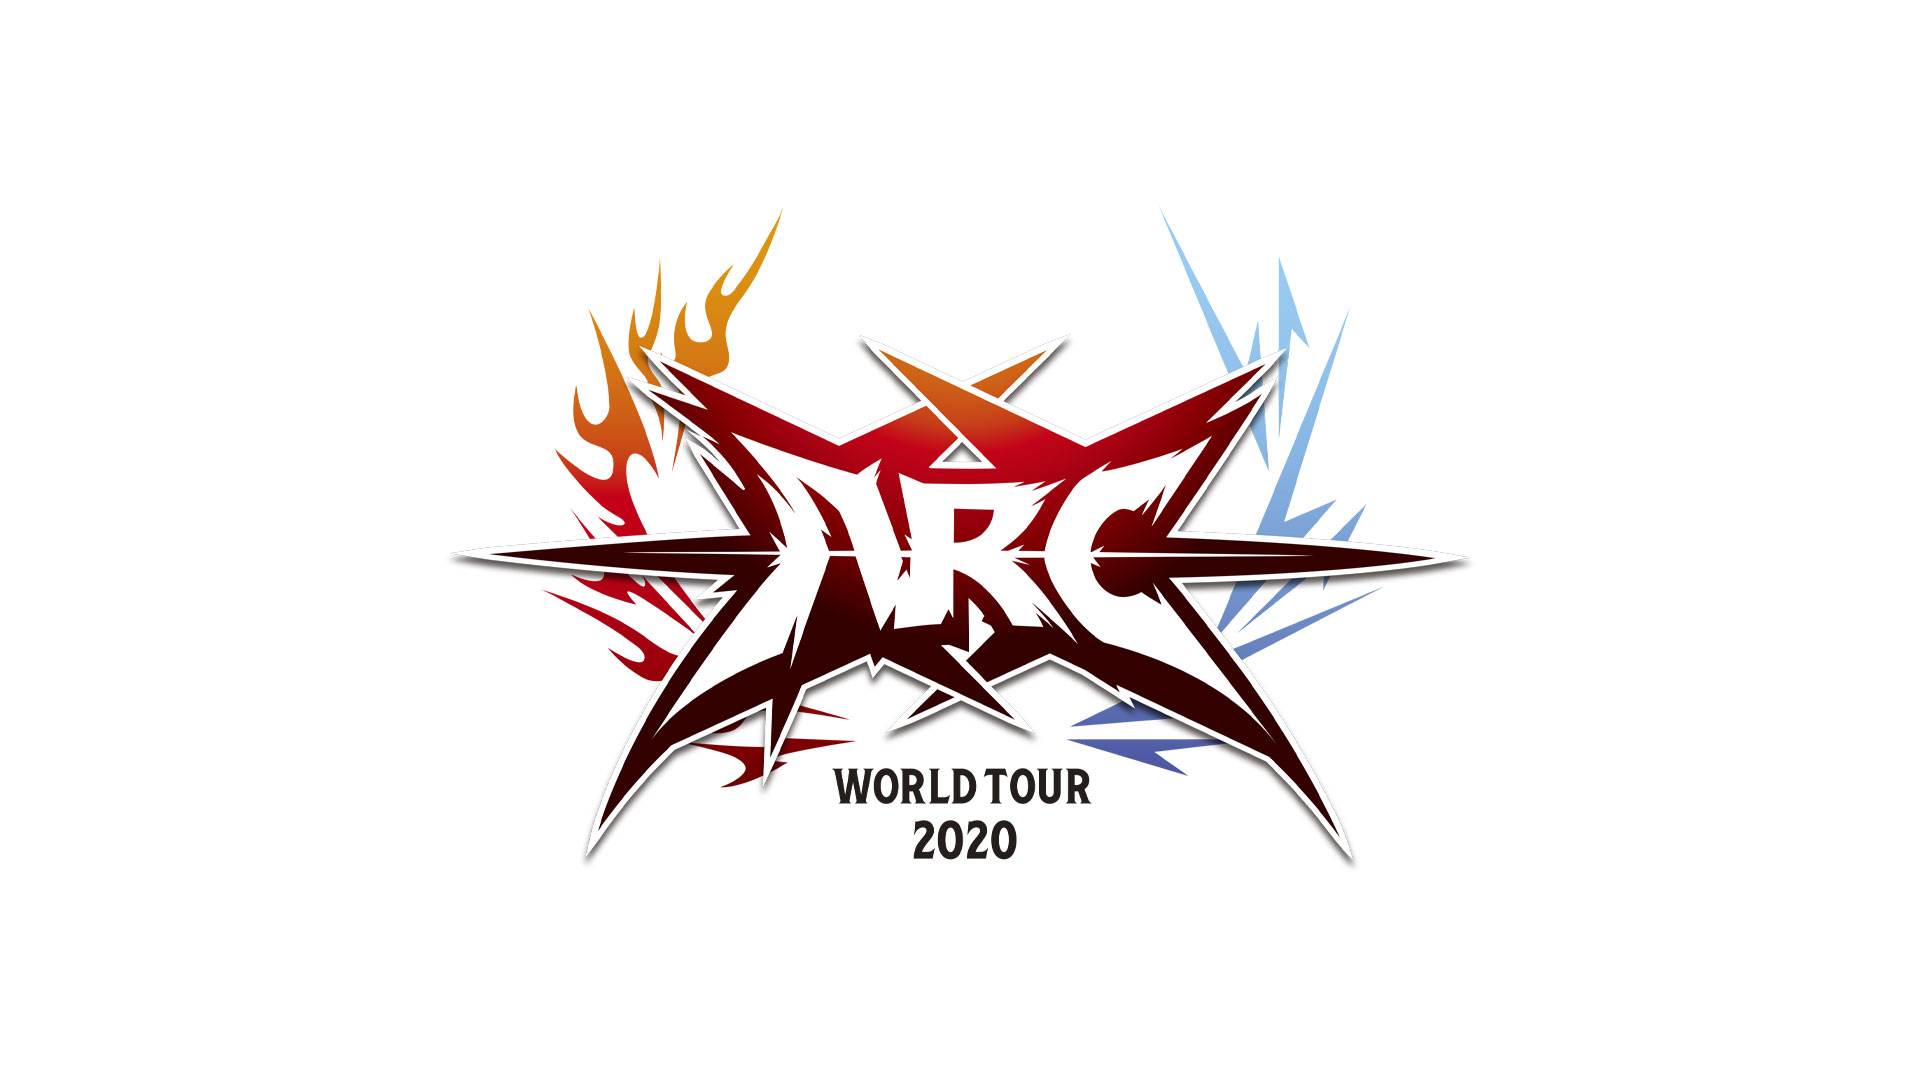 New Season Rising with Arc World Tour 2020